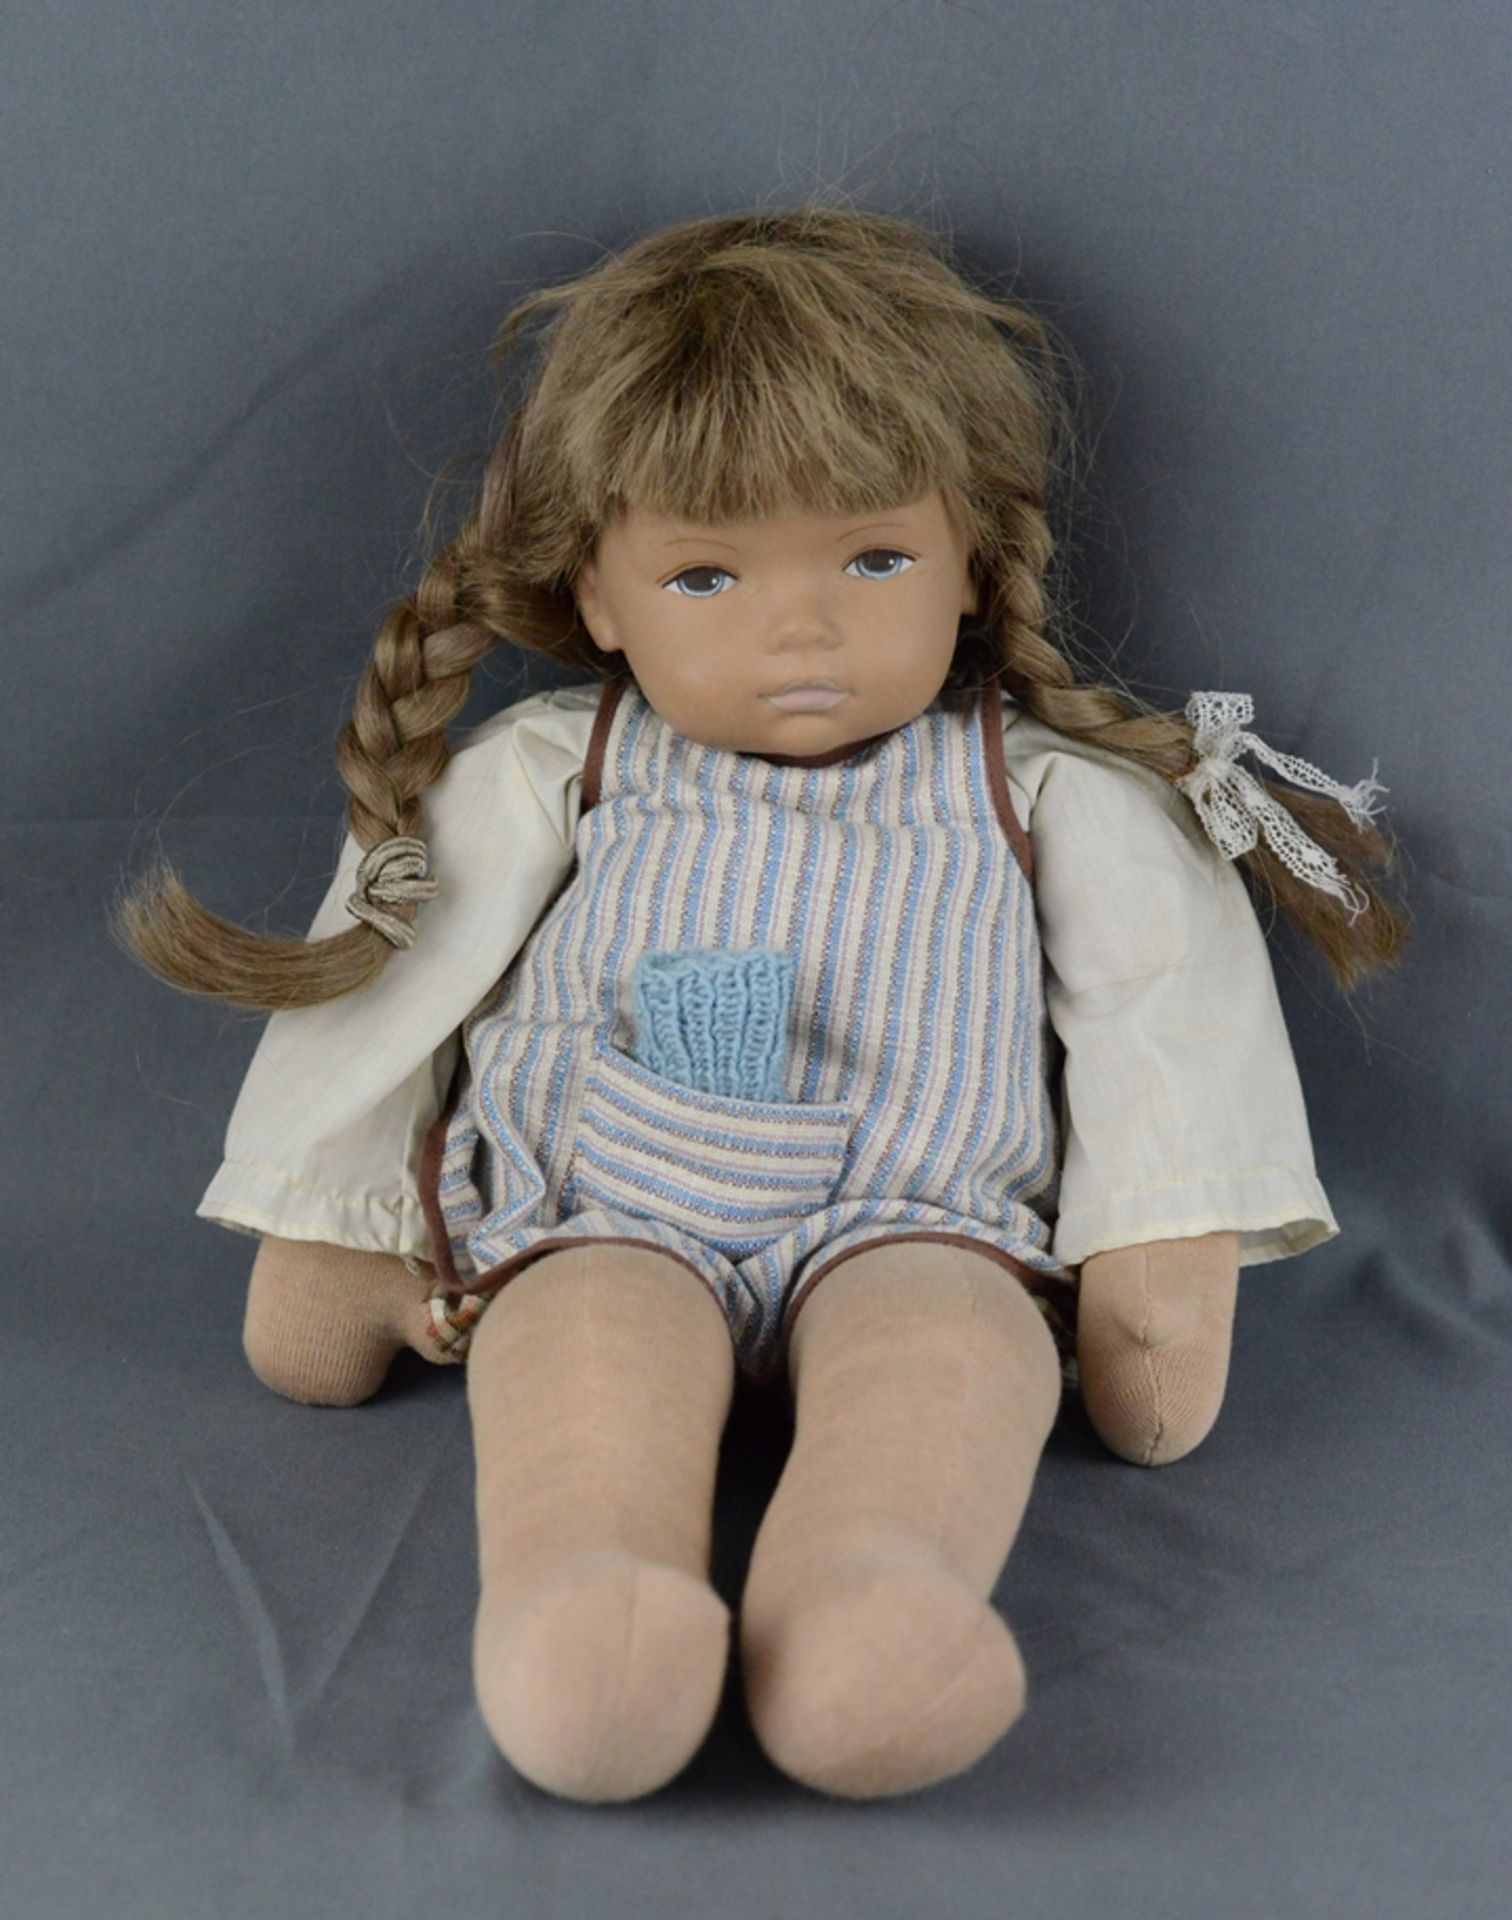 Puppe, Heidi Ott, 84 152, Stoffkörper, Echthaar geflochtene Zöpfe, Höhe ca. 50cm